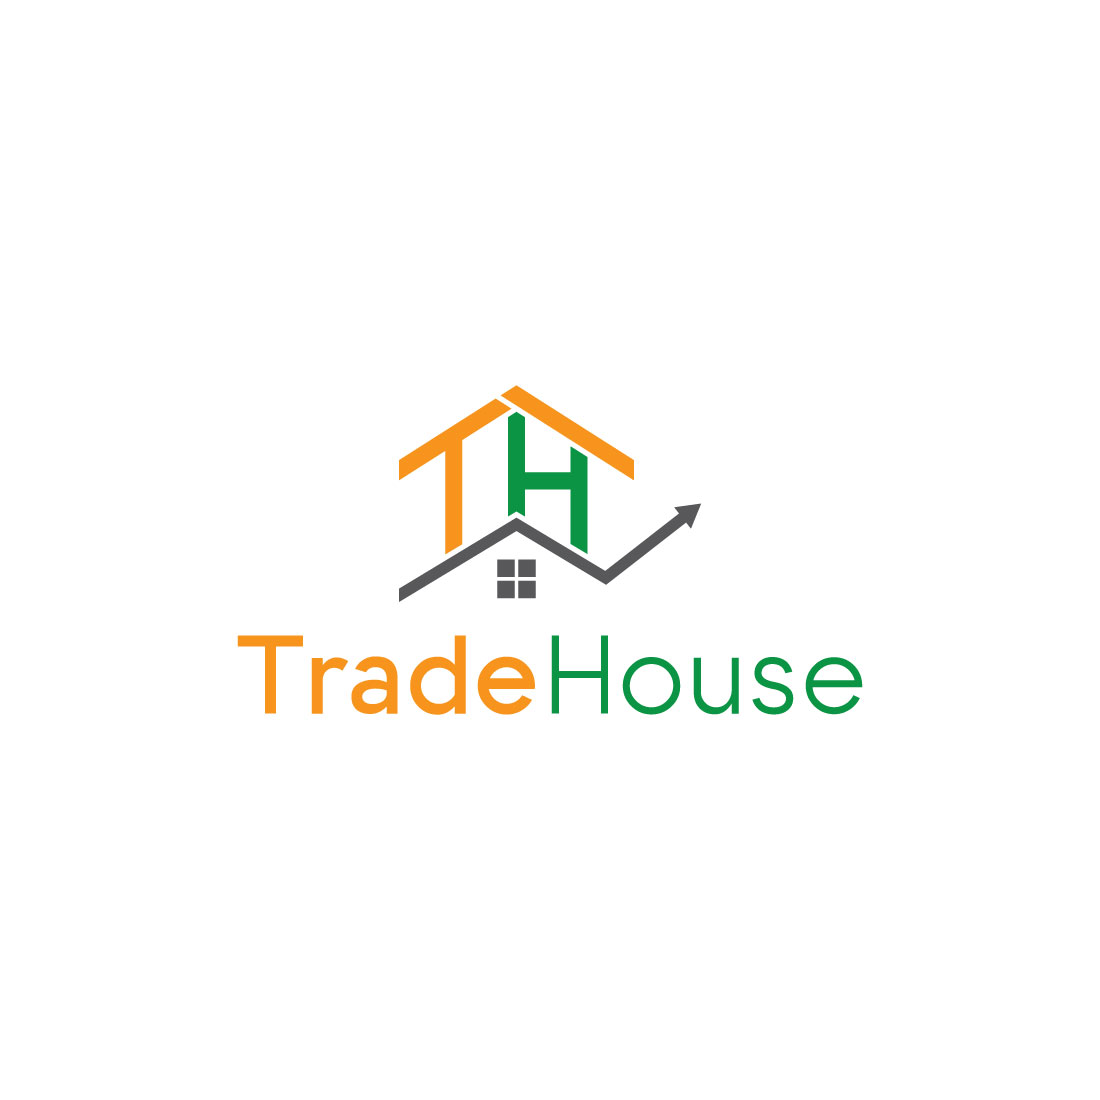 Trading House Logo cover image.